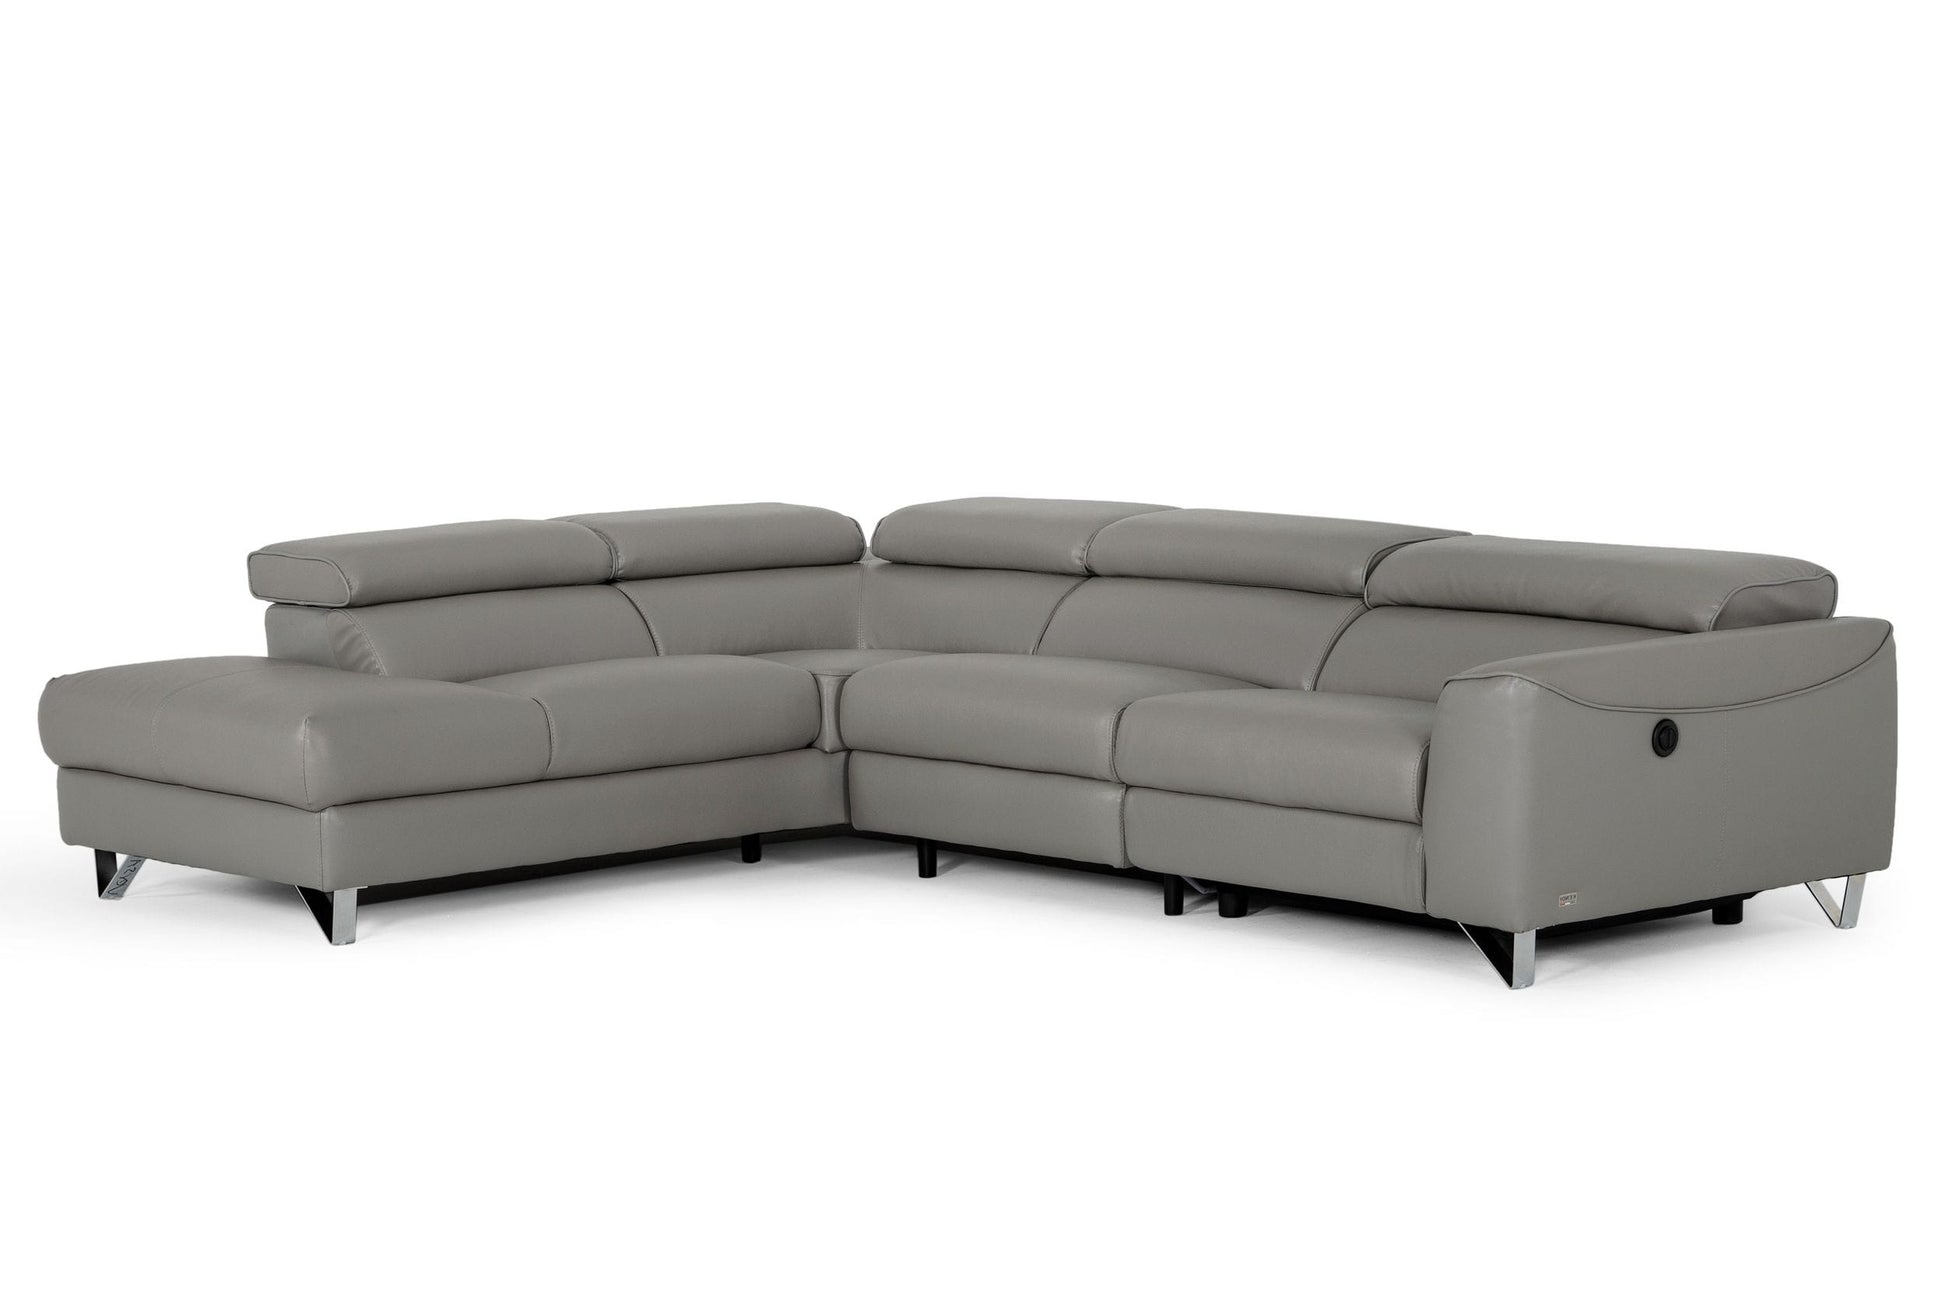 VIG Furniture Divani Casa Versa Grey Leather Left Sectional Sofa Recliner